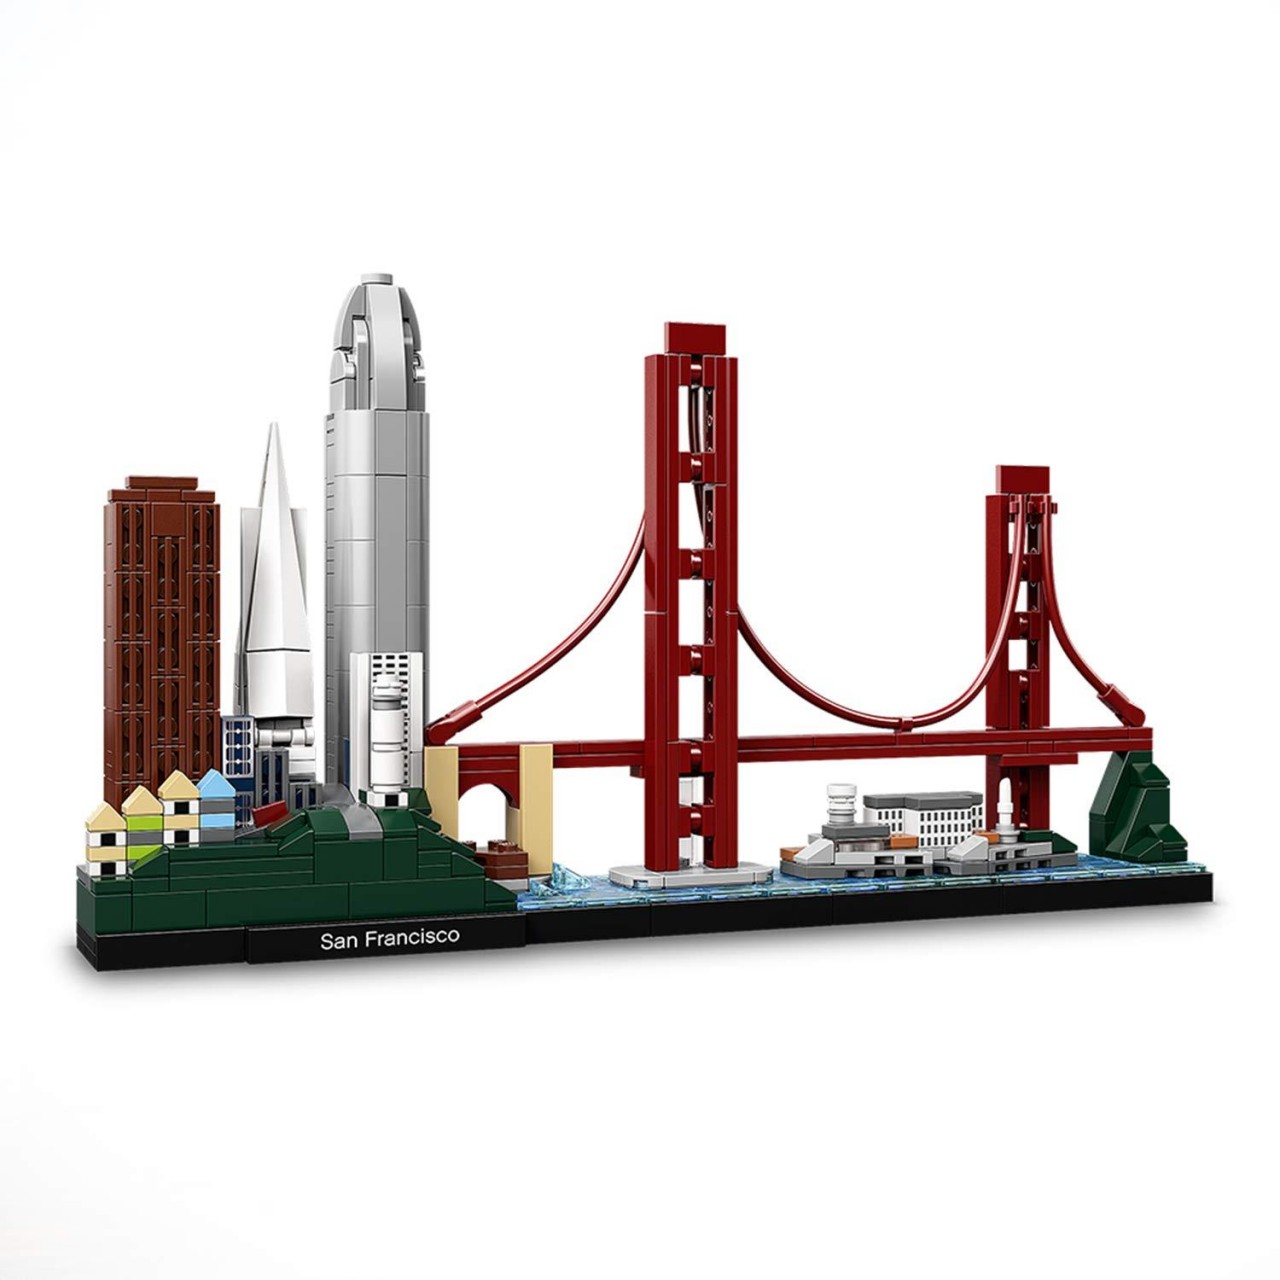 LEGO ARCHITECTURE 21043 San Francisco